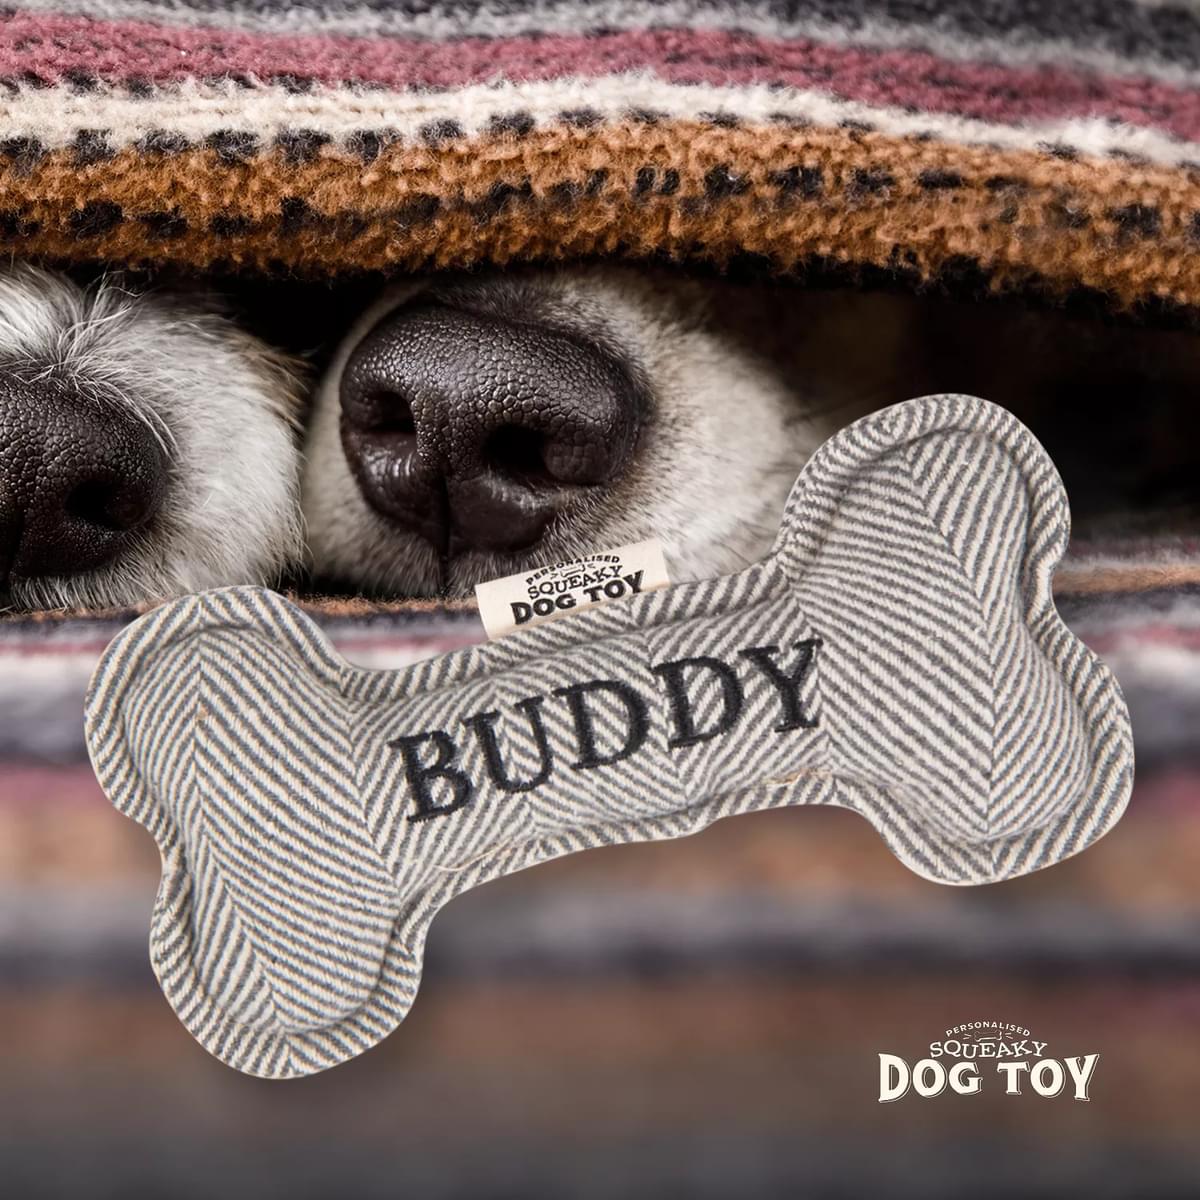 Named Squeaky Dog Toy- Buddy. Bone shaped herringbone tweed pattern dog toy. 